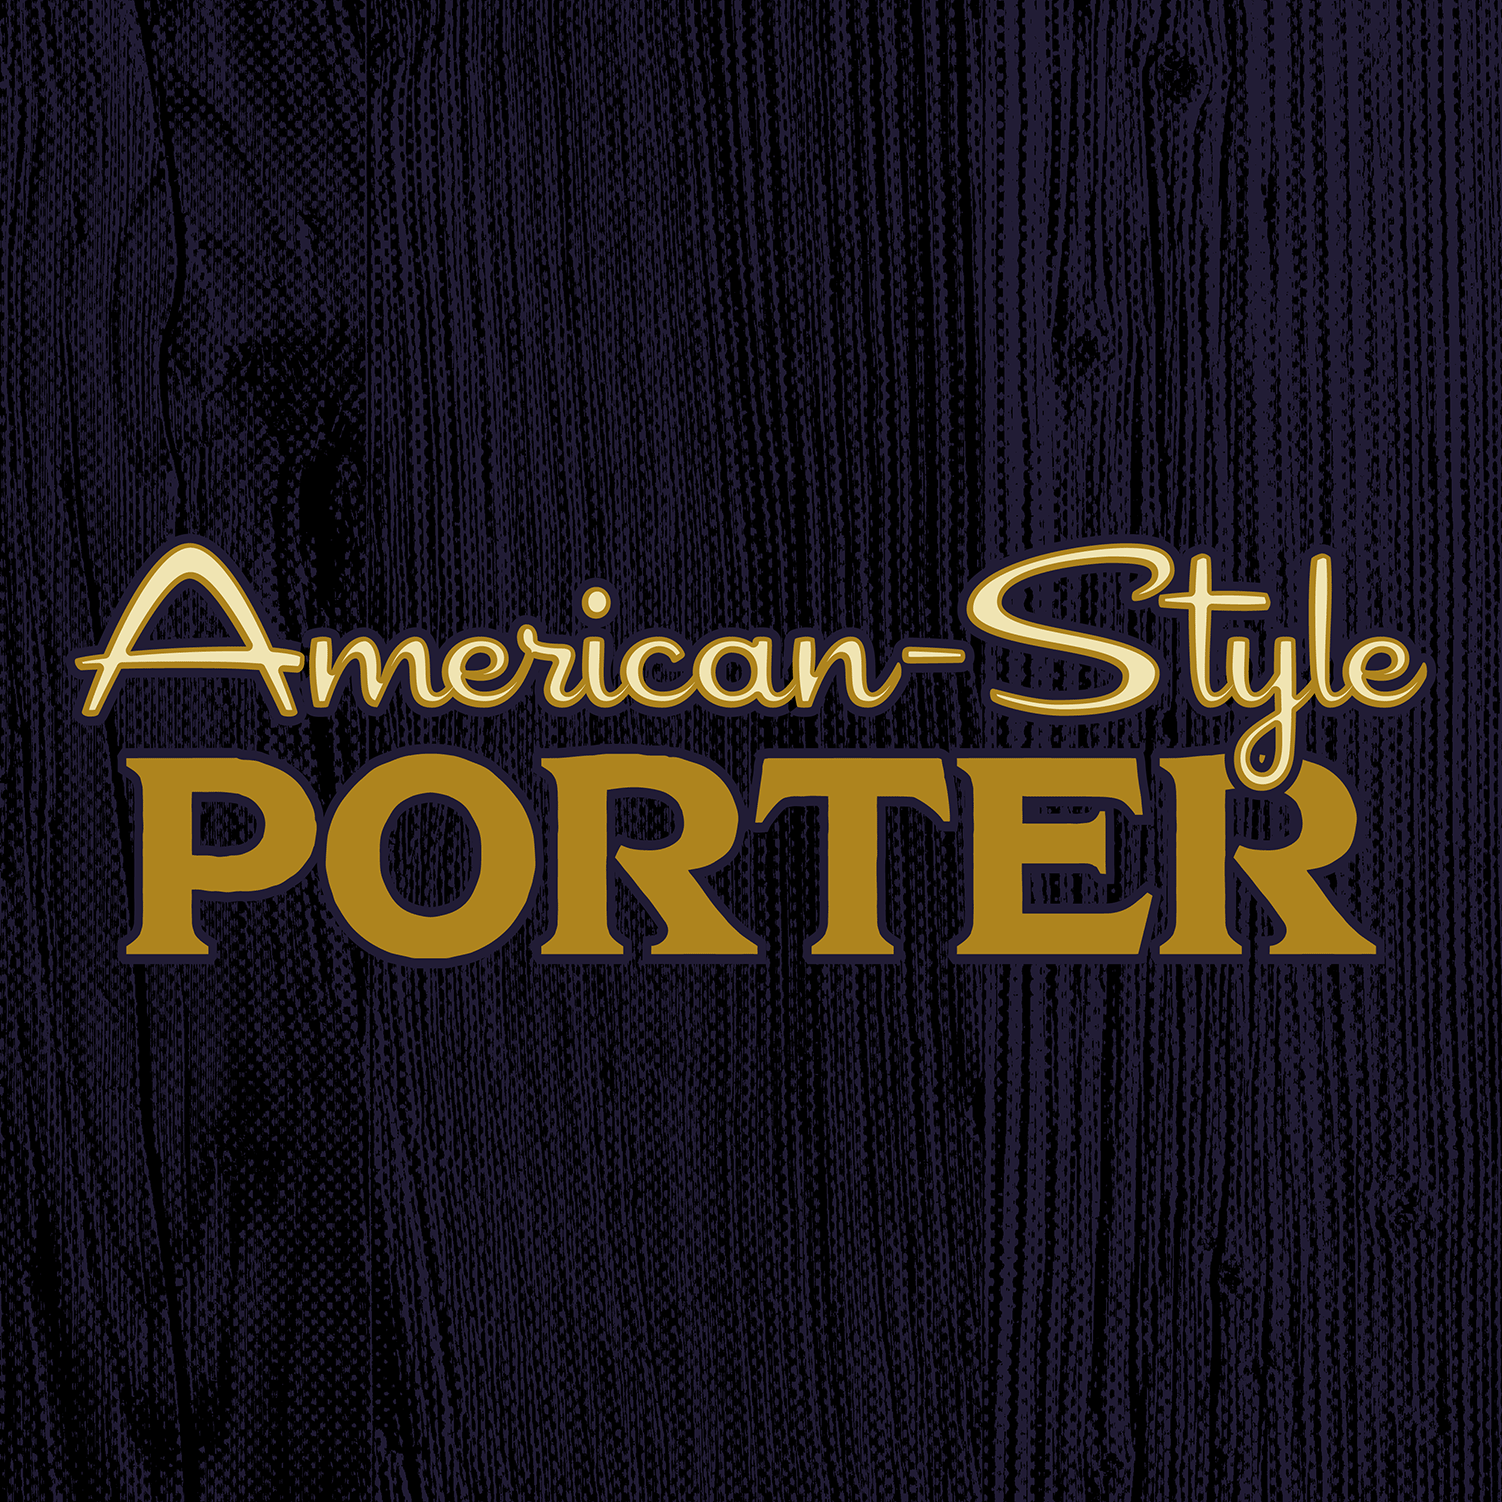 AmericanPorter_Webtile-02